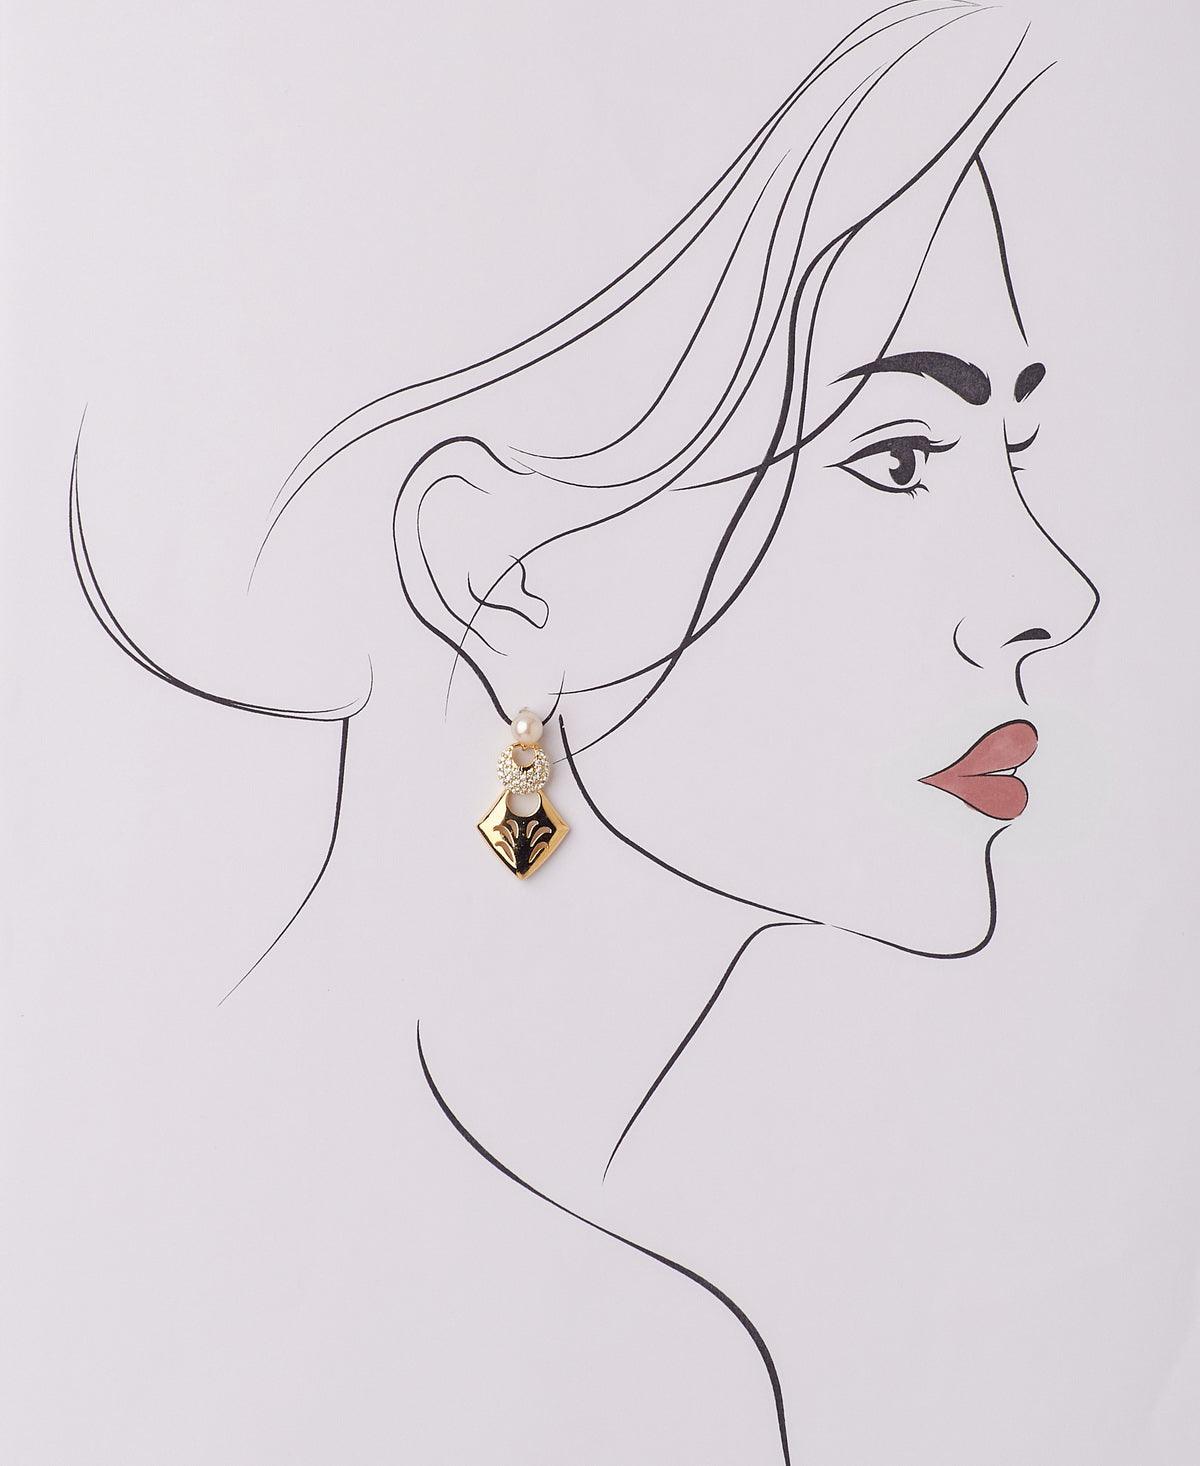 Fancy Hanging Pearl Earring - Chandrani Pearls